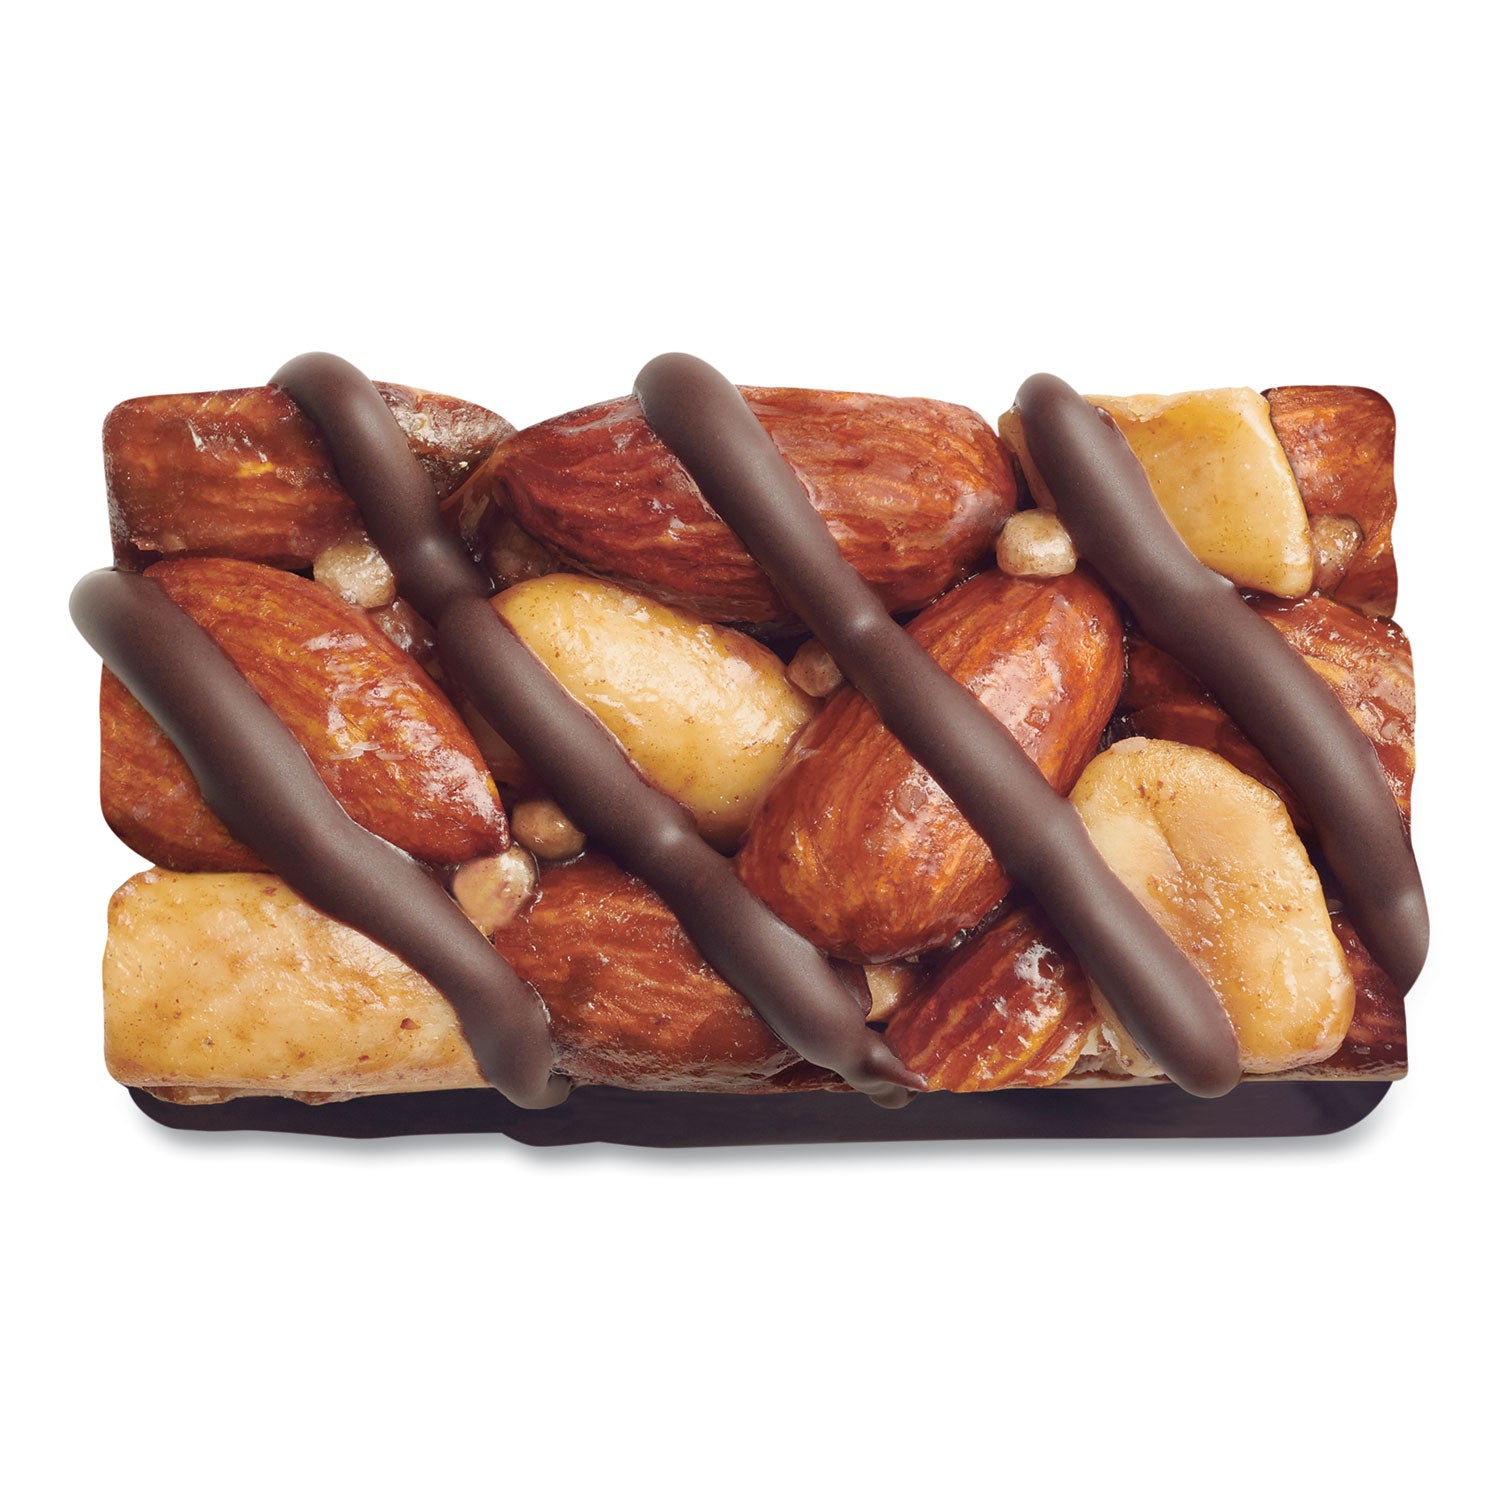 minis-dark-chocolate-nuts-and-sea-salt-caramel-almond-and-sea-salt-07-oz-20-pack_knd27964 - 5